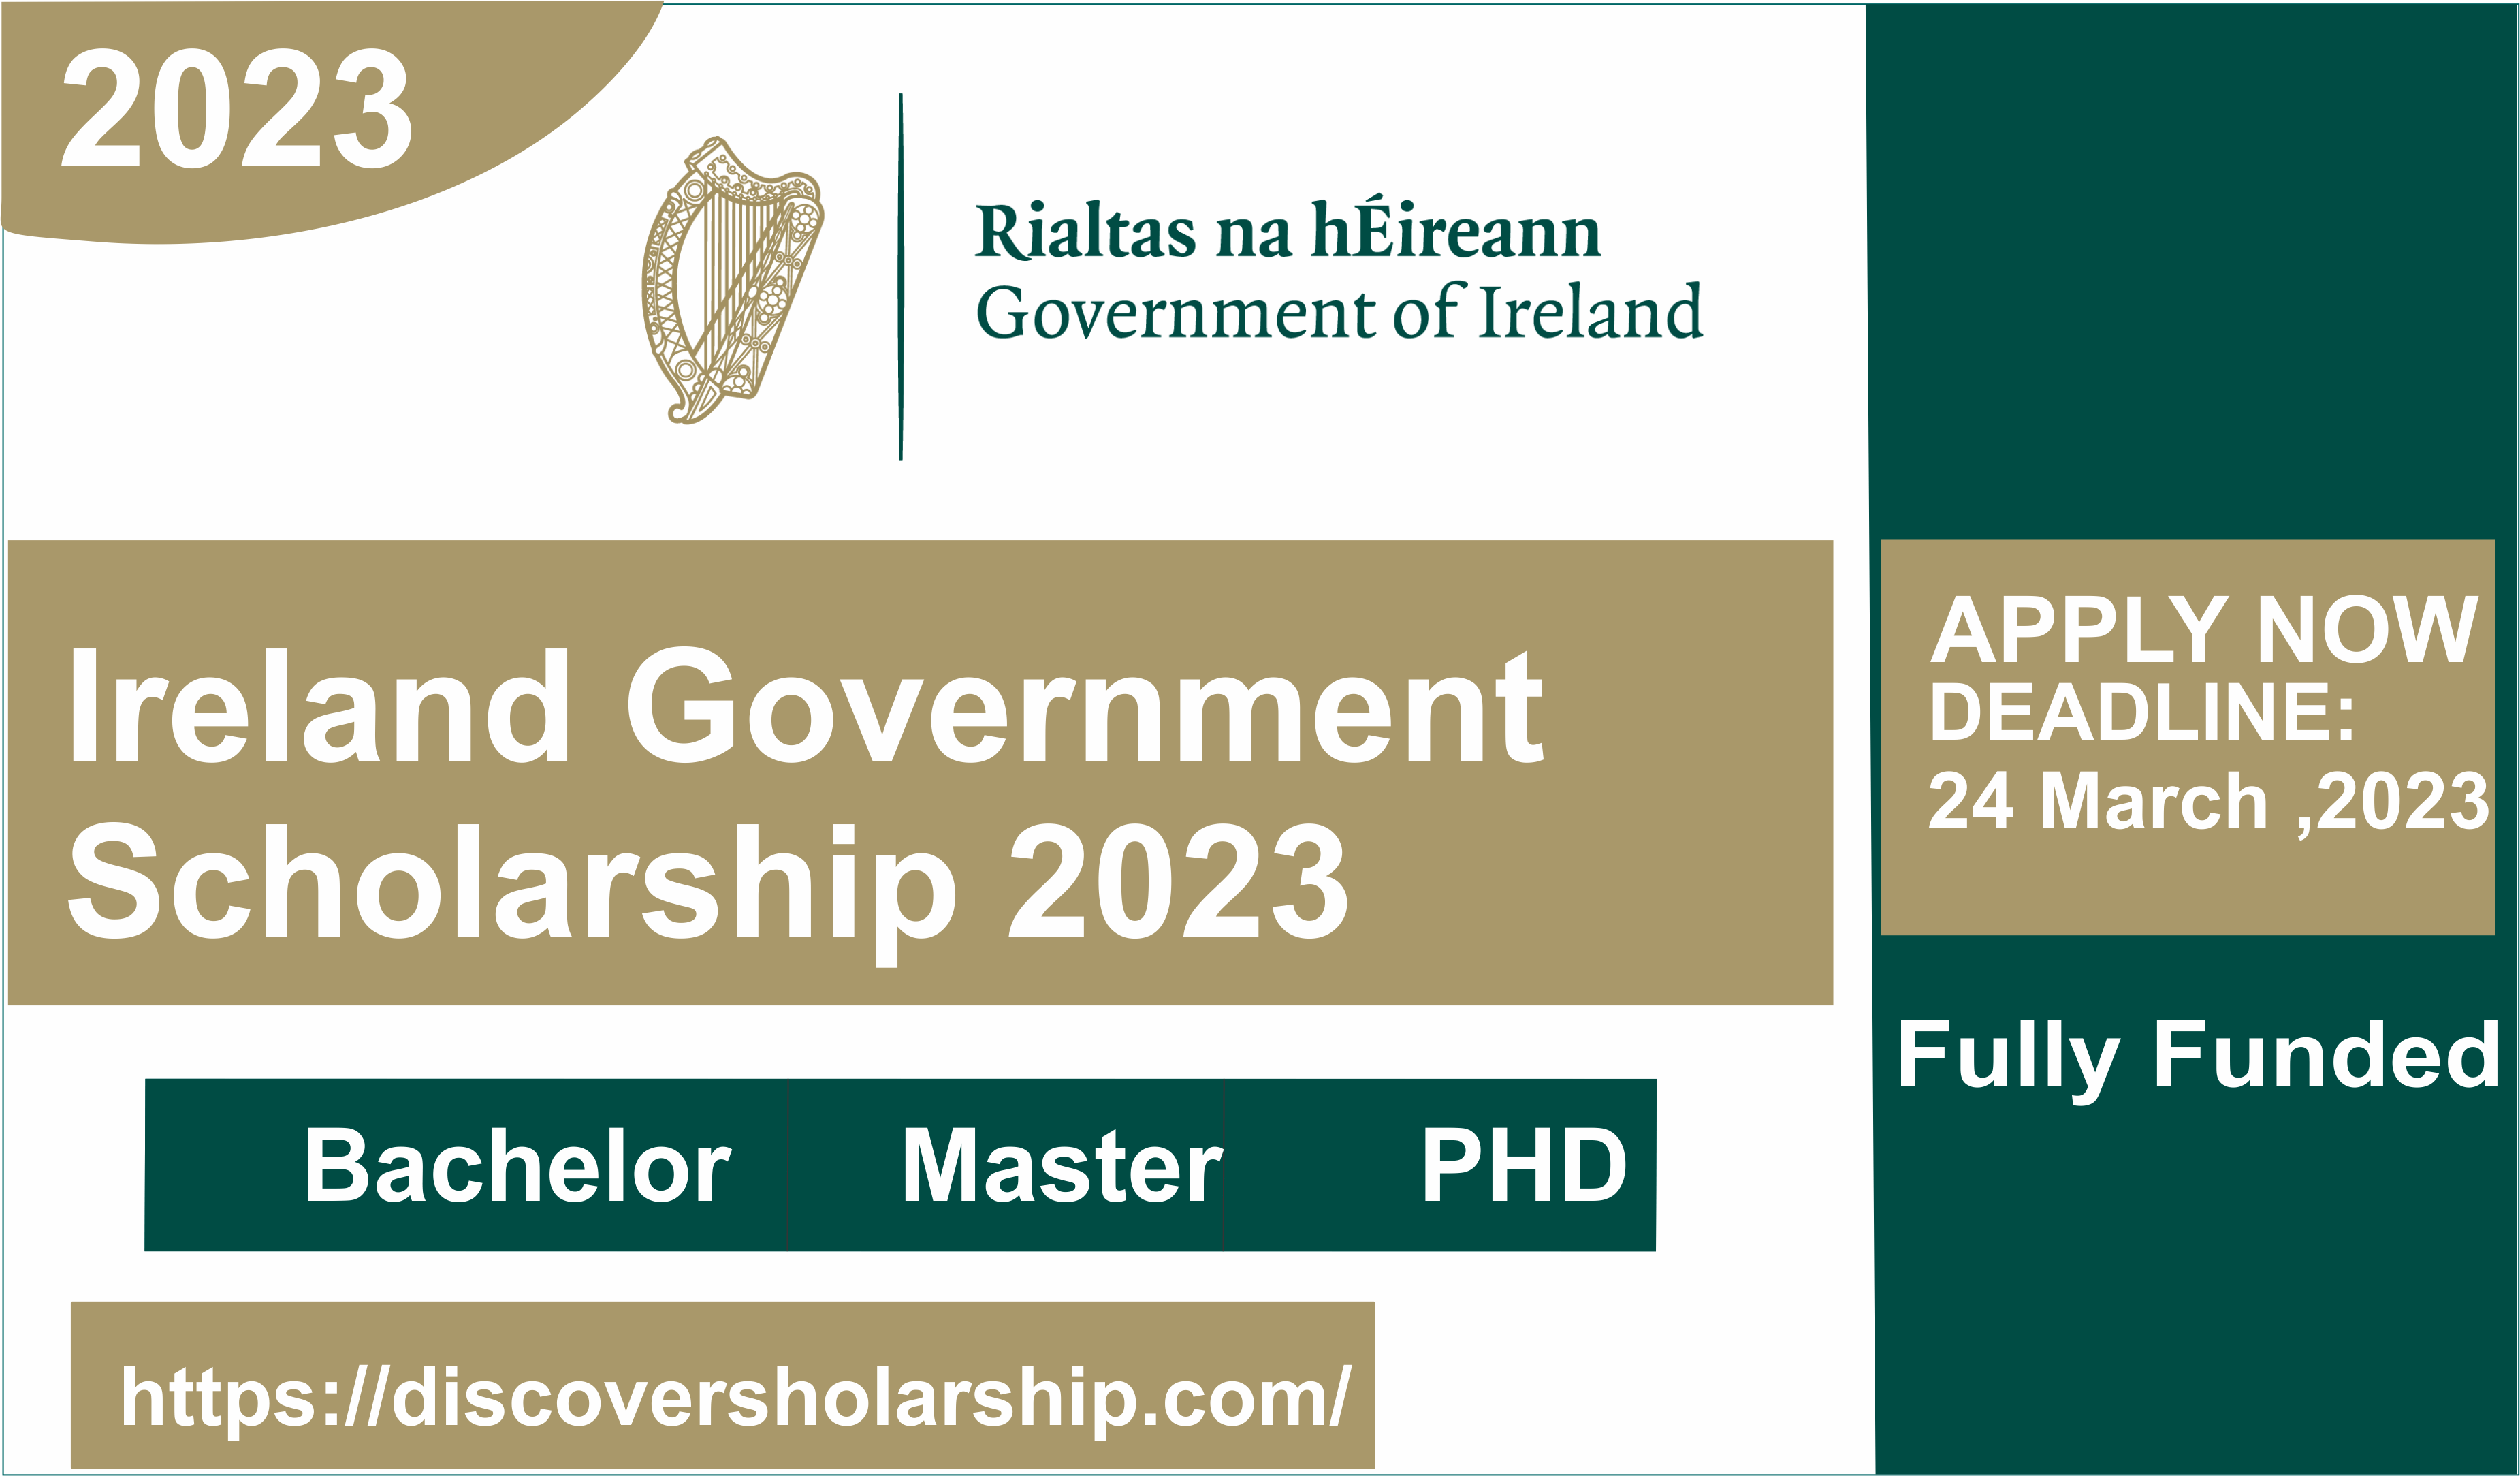 Government of Ireland International Education Scholarships 2023